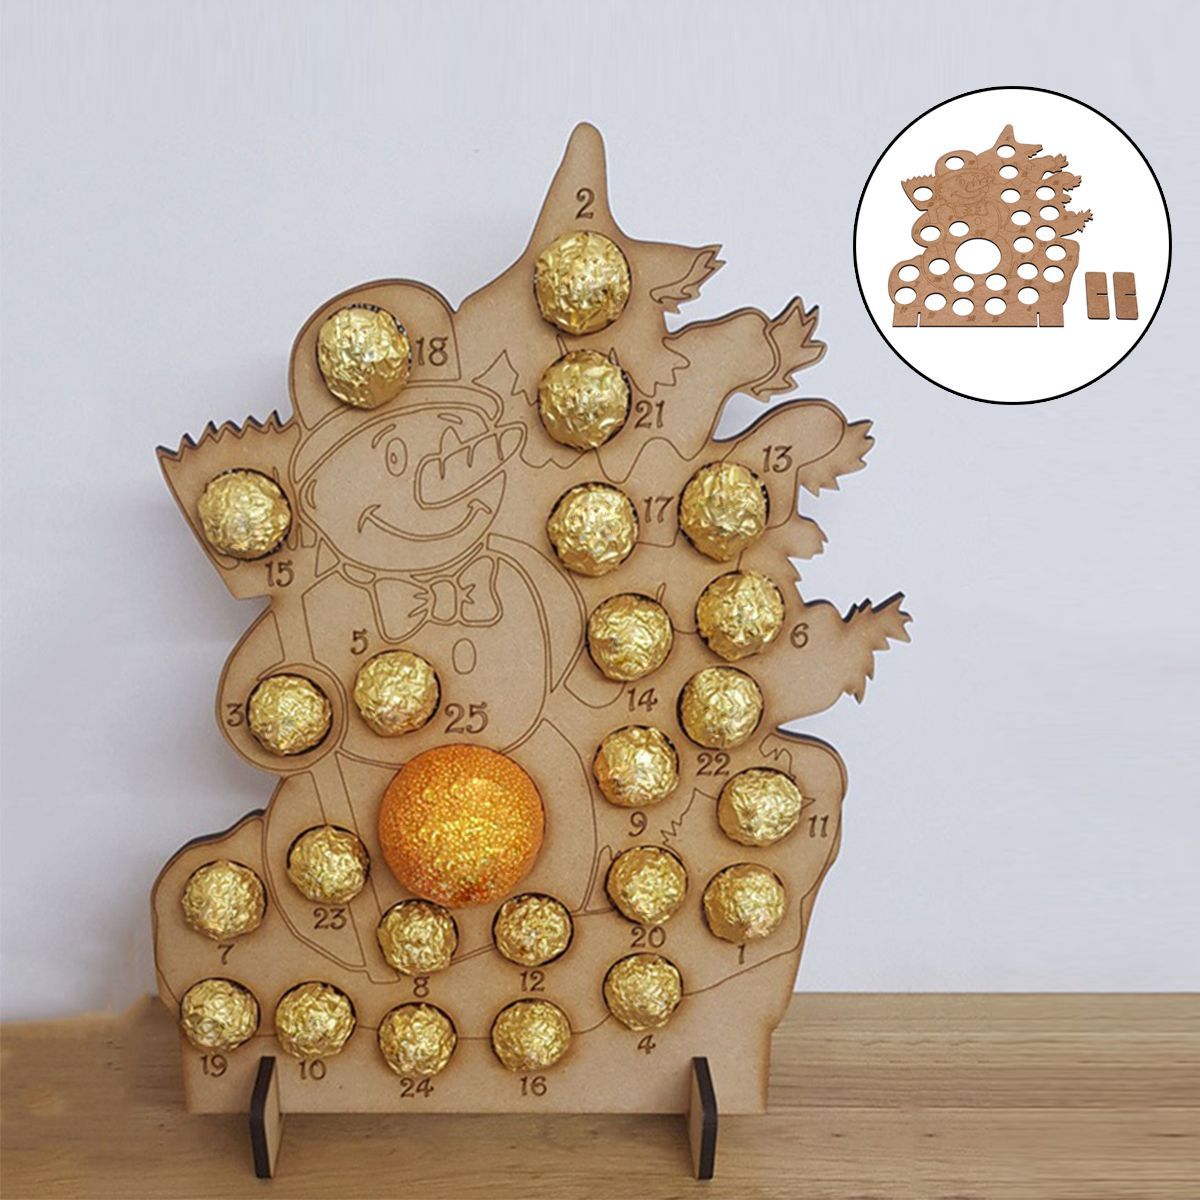 Wooden-Christmas-Advent-Calendar-Snowman-Chocolates-Orange-Storage-Box-Xmas-Gift-Decorations-1460359